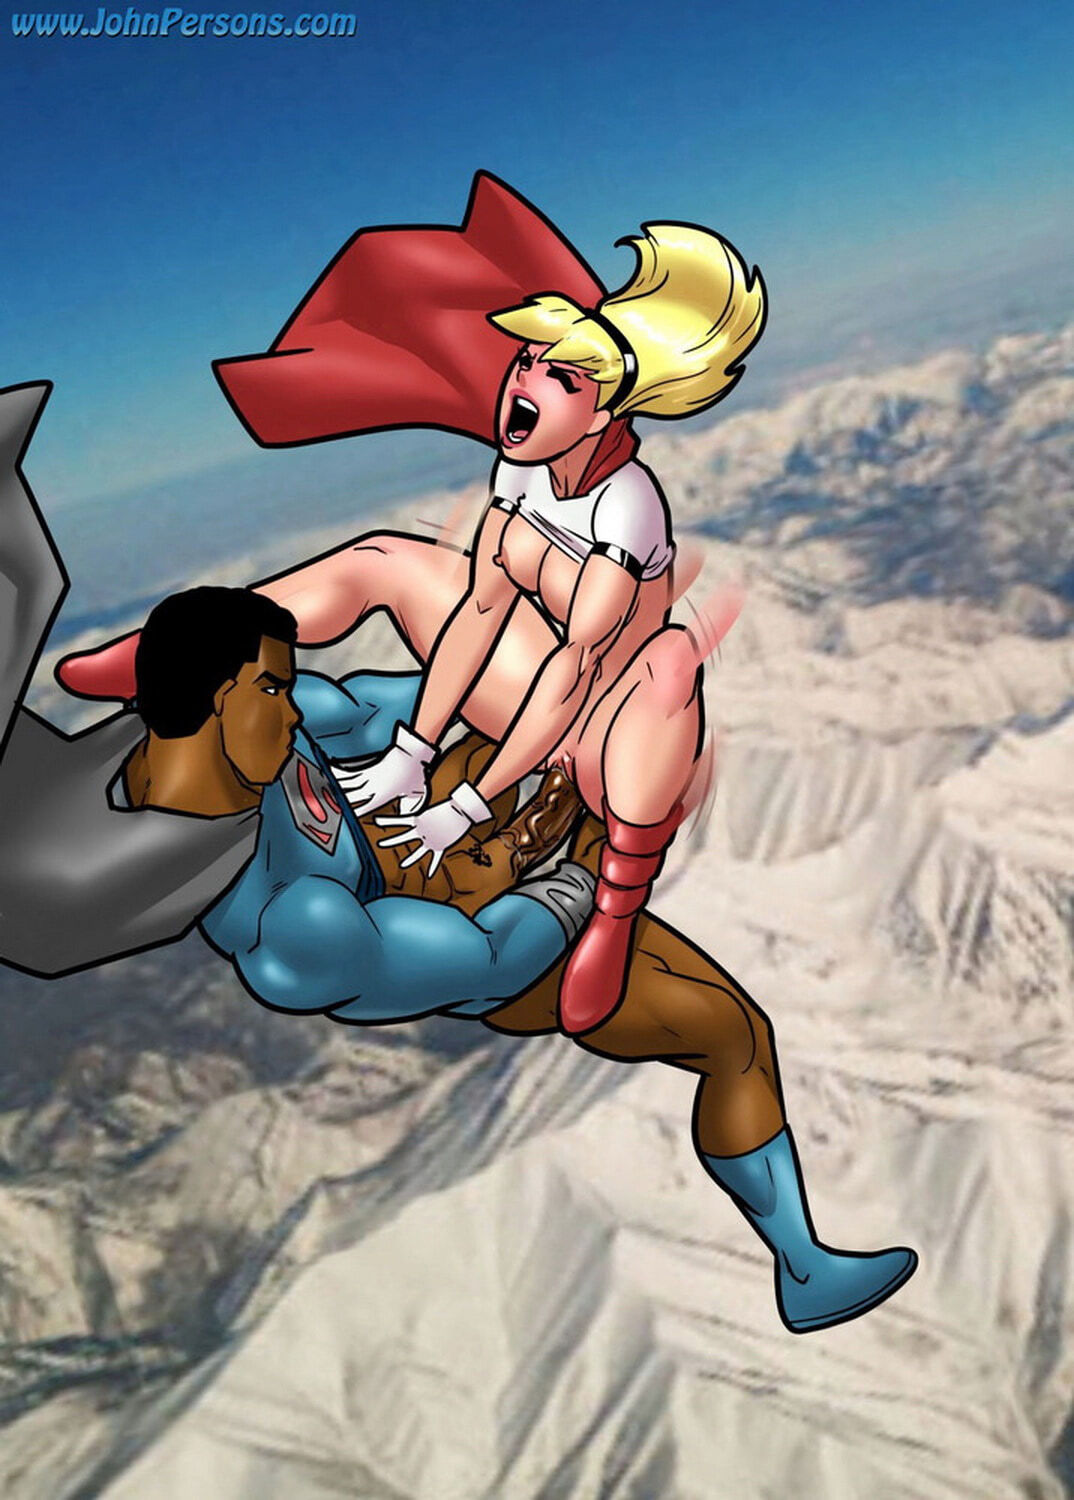 Superman and Supergirl Vaginal Penetration Sex Interracial Superhero